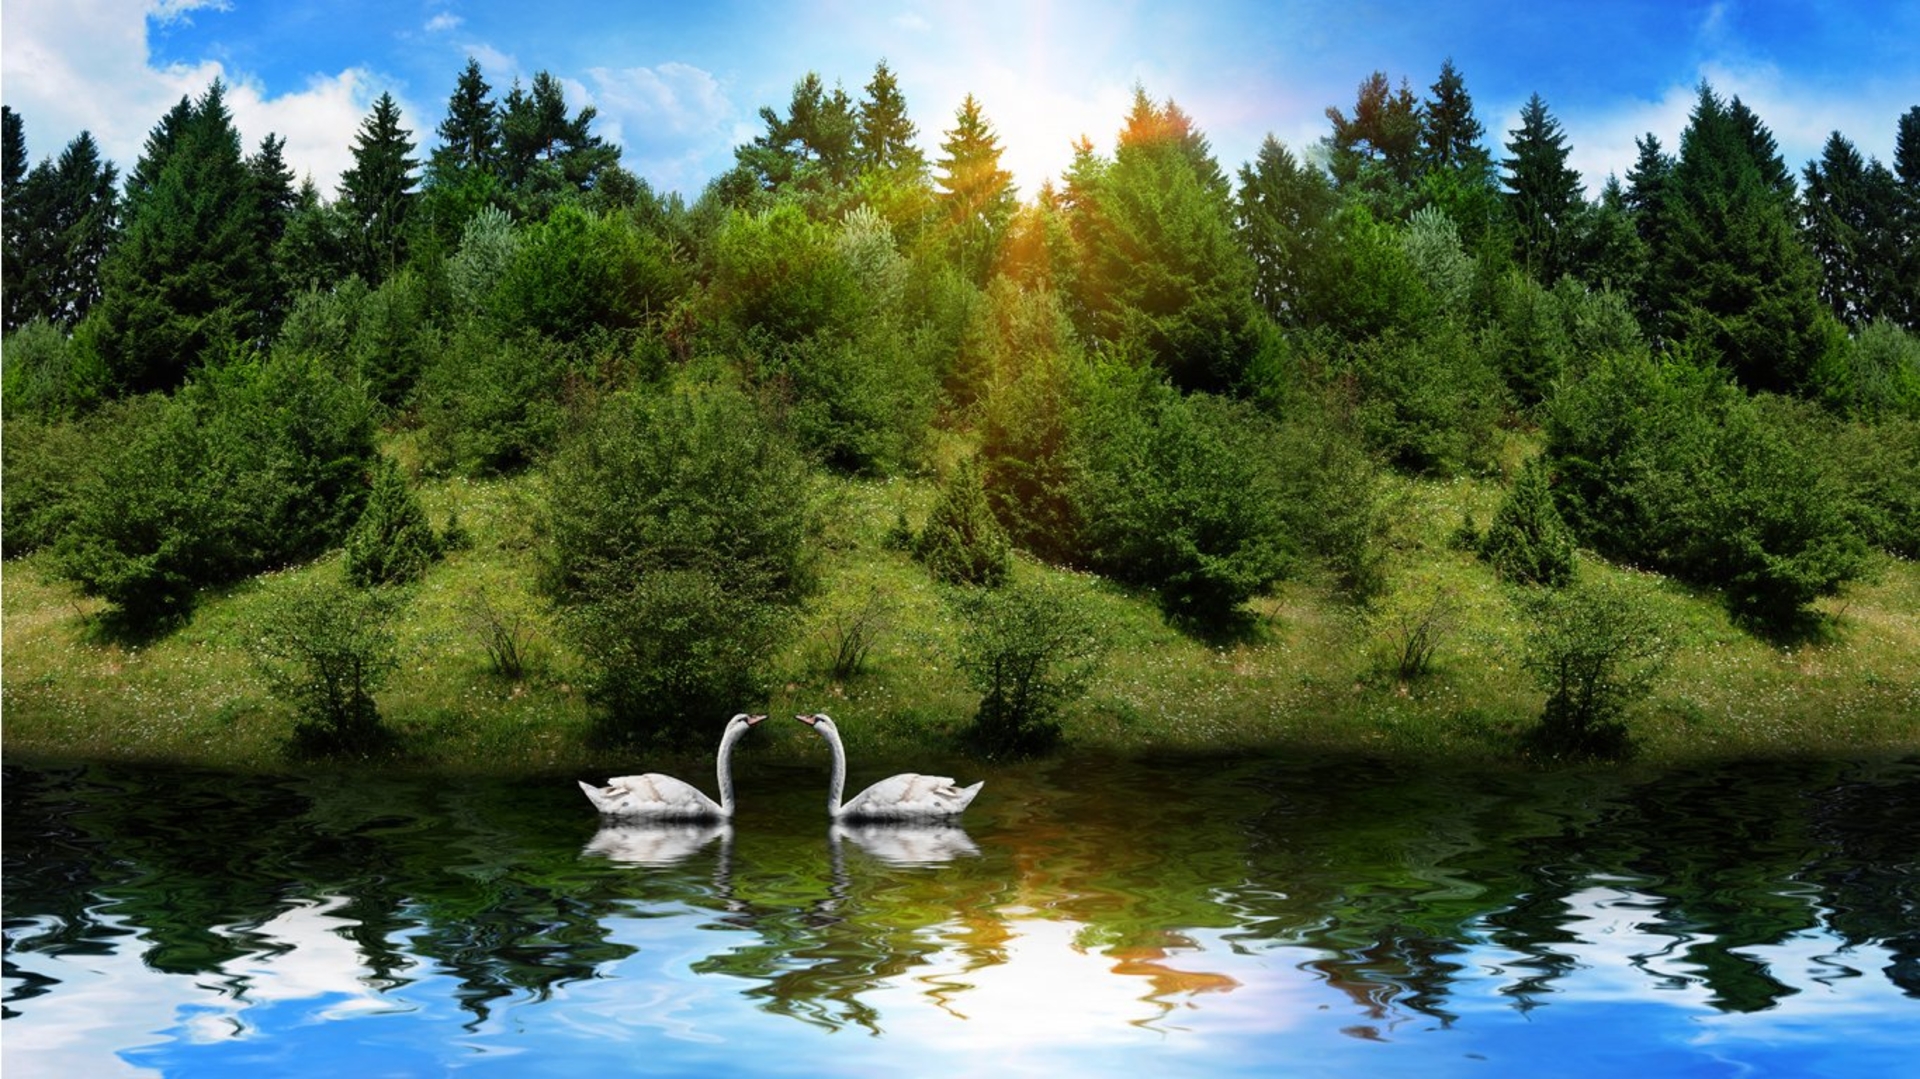 Cool Nature Background Images | PixelsTalk.Net